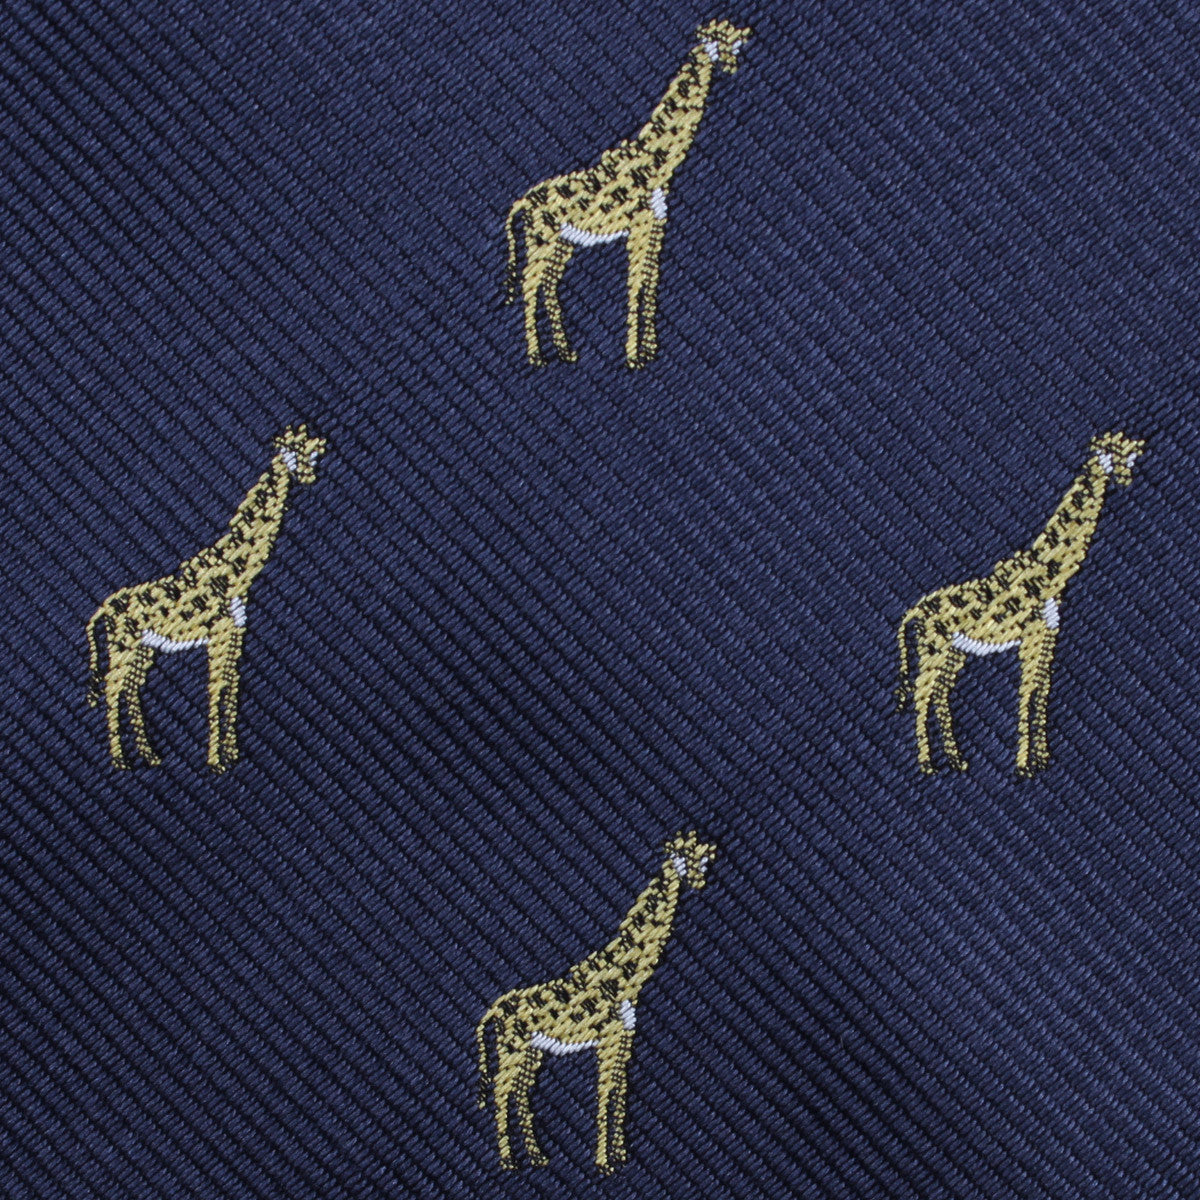 Giraffe Fabric Self Bowtie